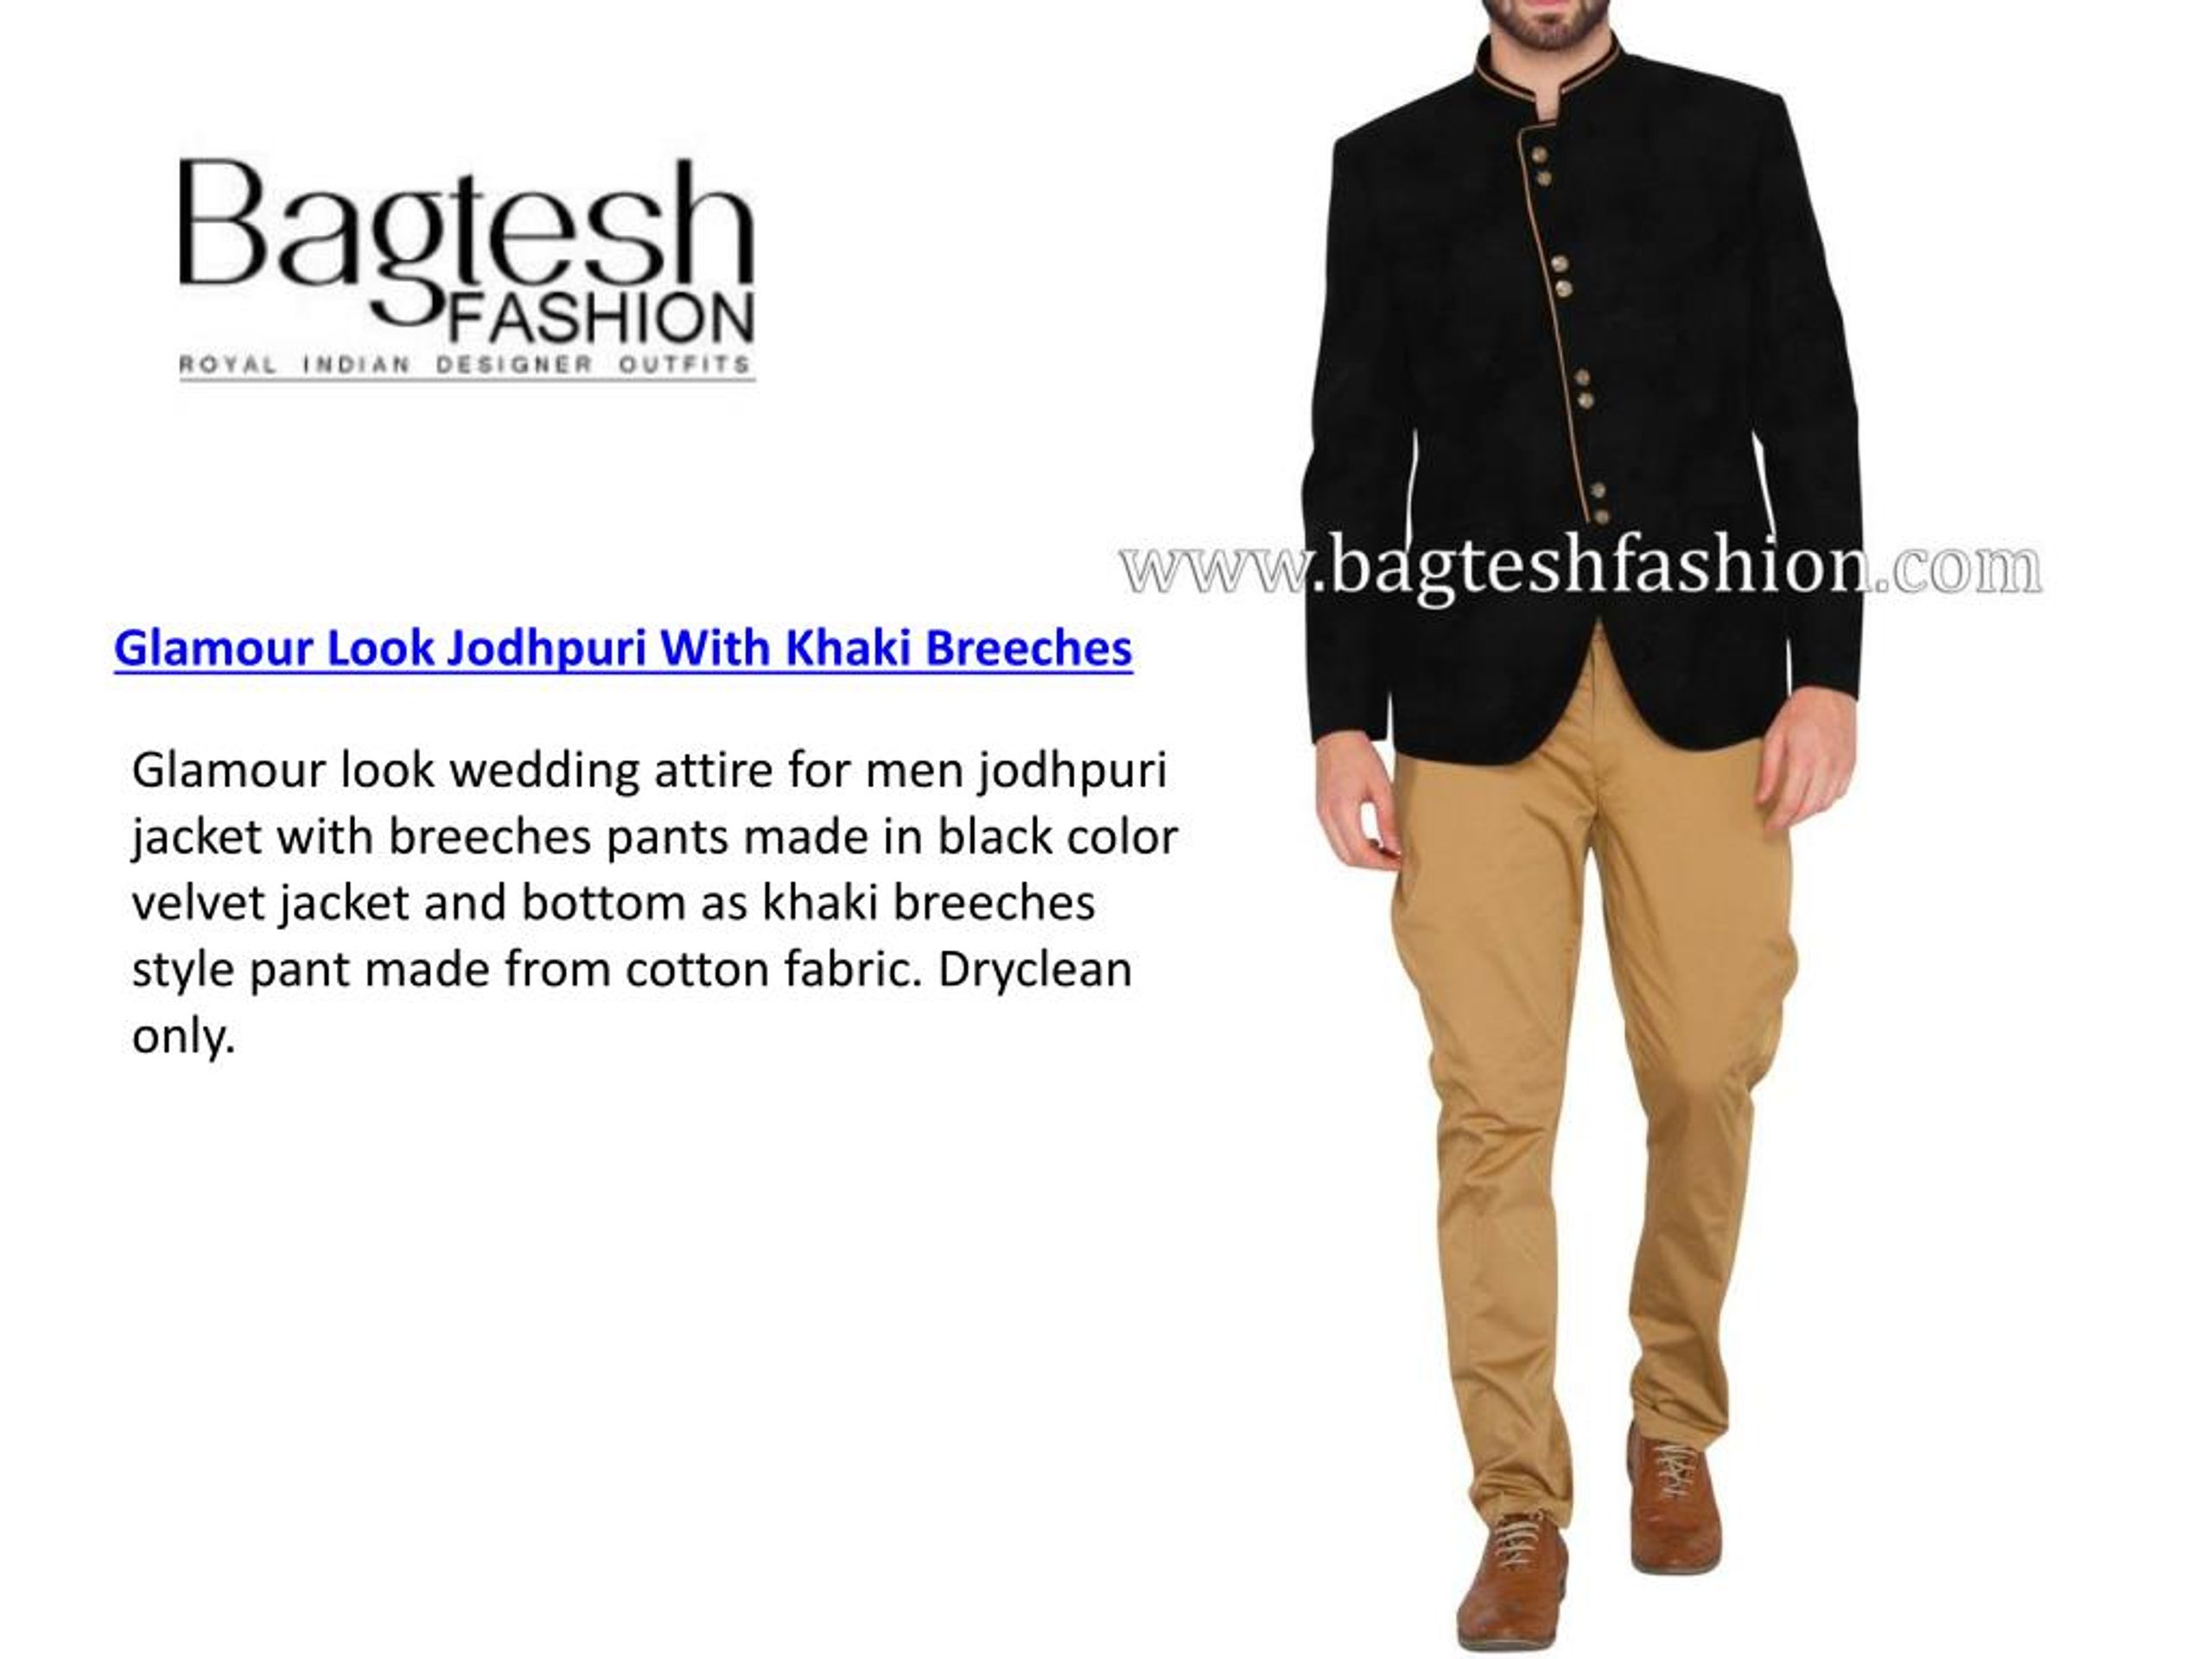 Royal men's wear | Dress suits for men, Mens fashion blazer, Stylish shirts  men